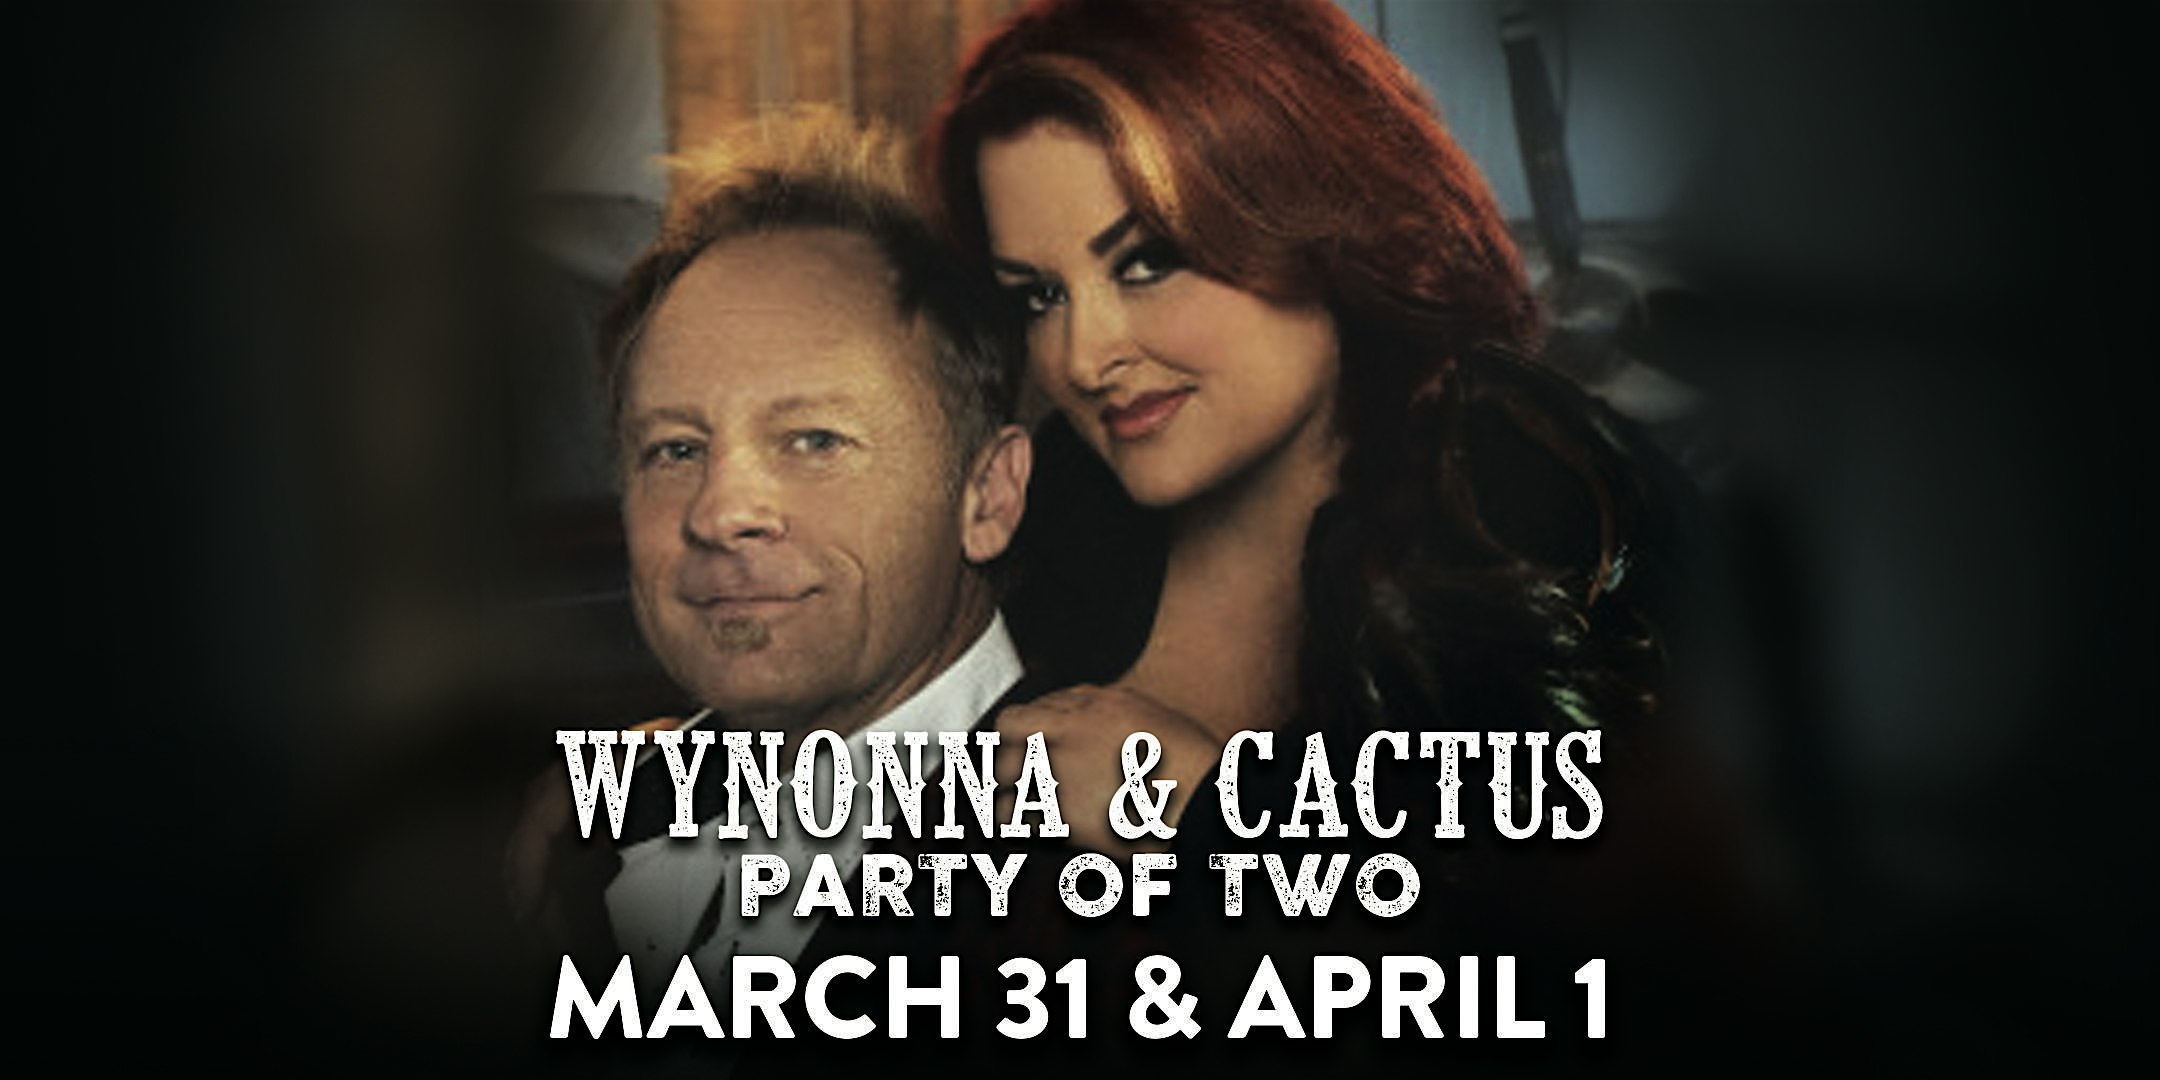 Wynonna & Cactus